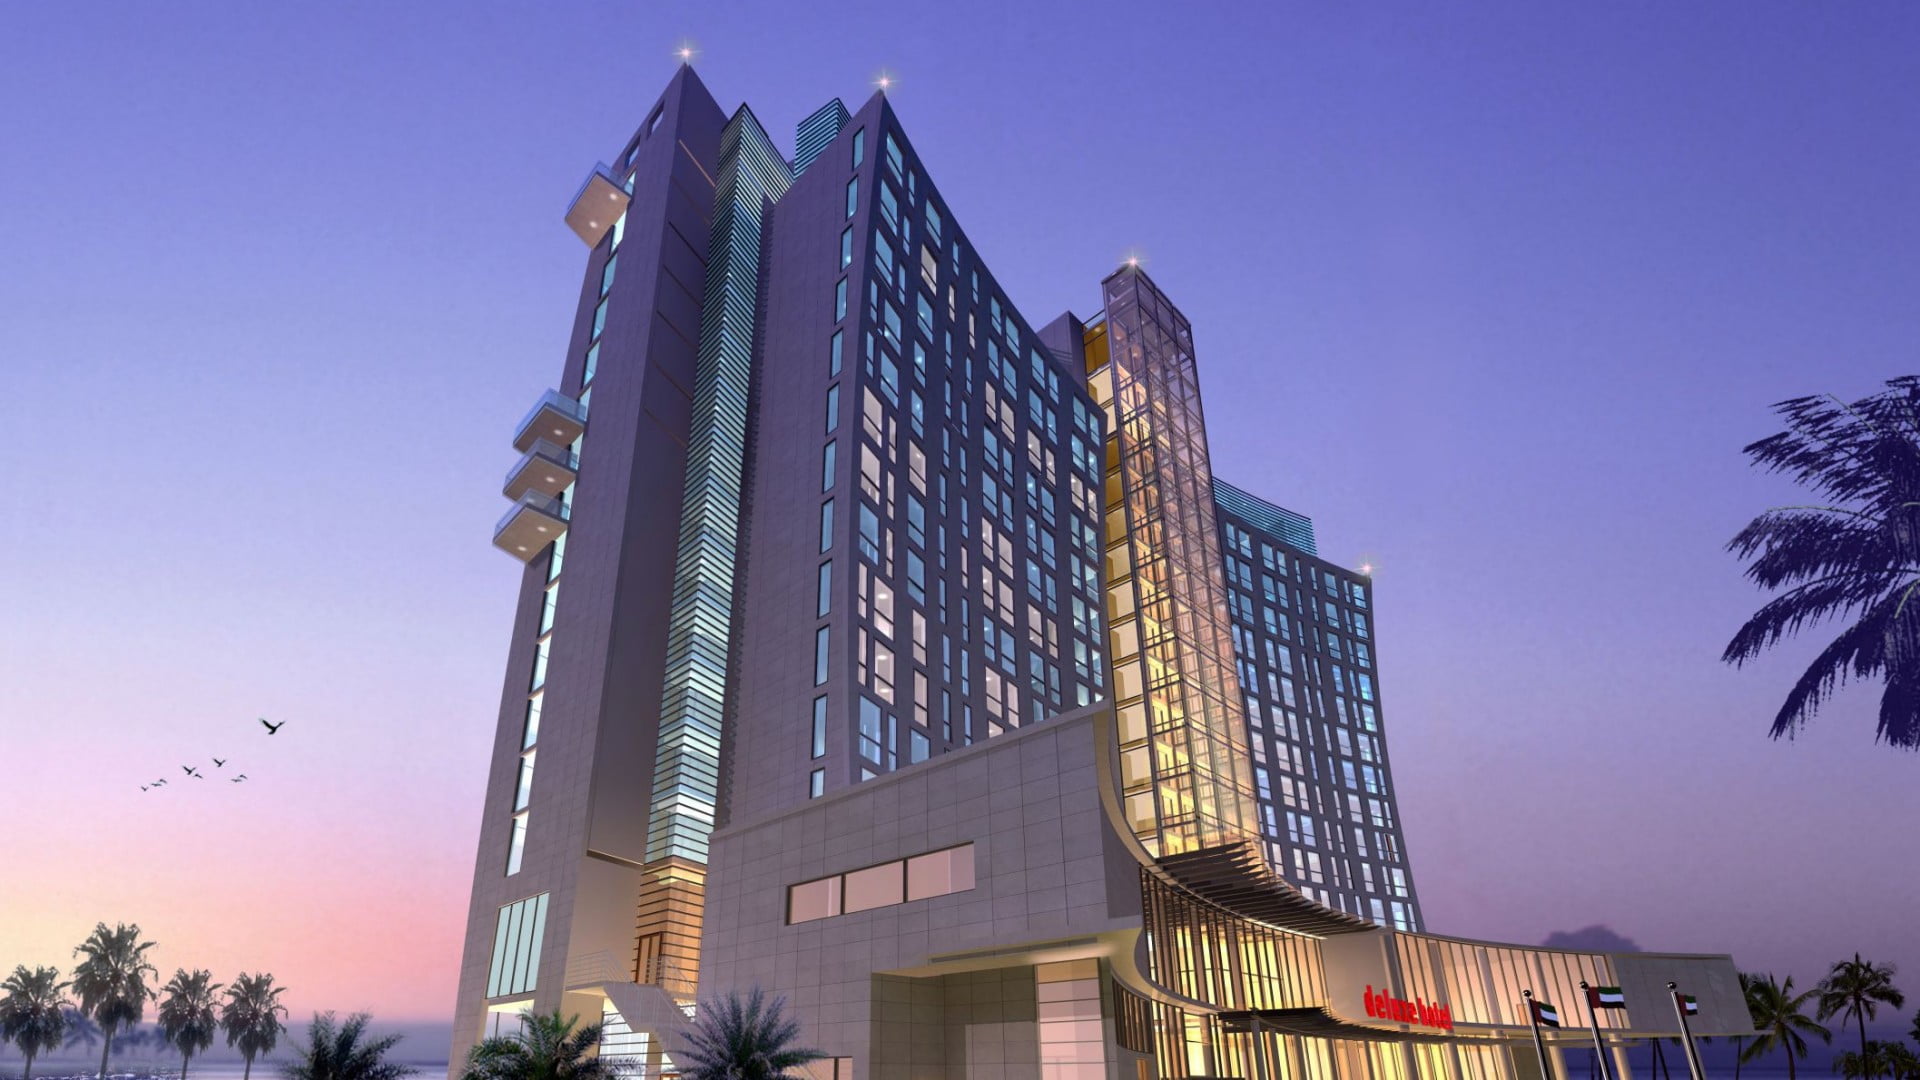 Grand Marina Intercontinental Hotel, Abu Dhabi